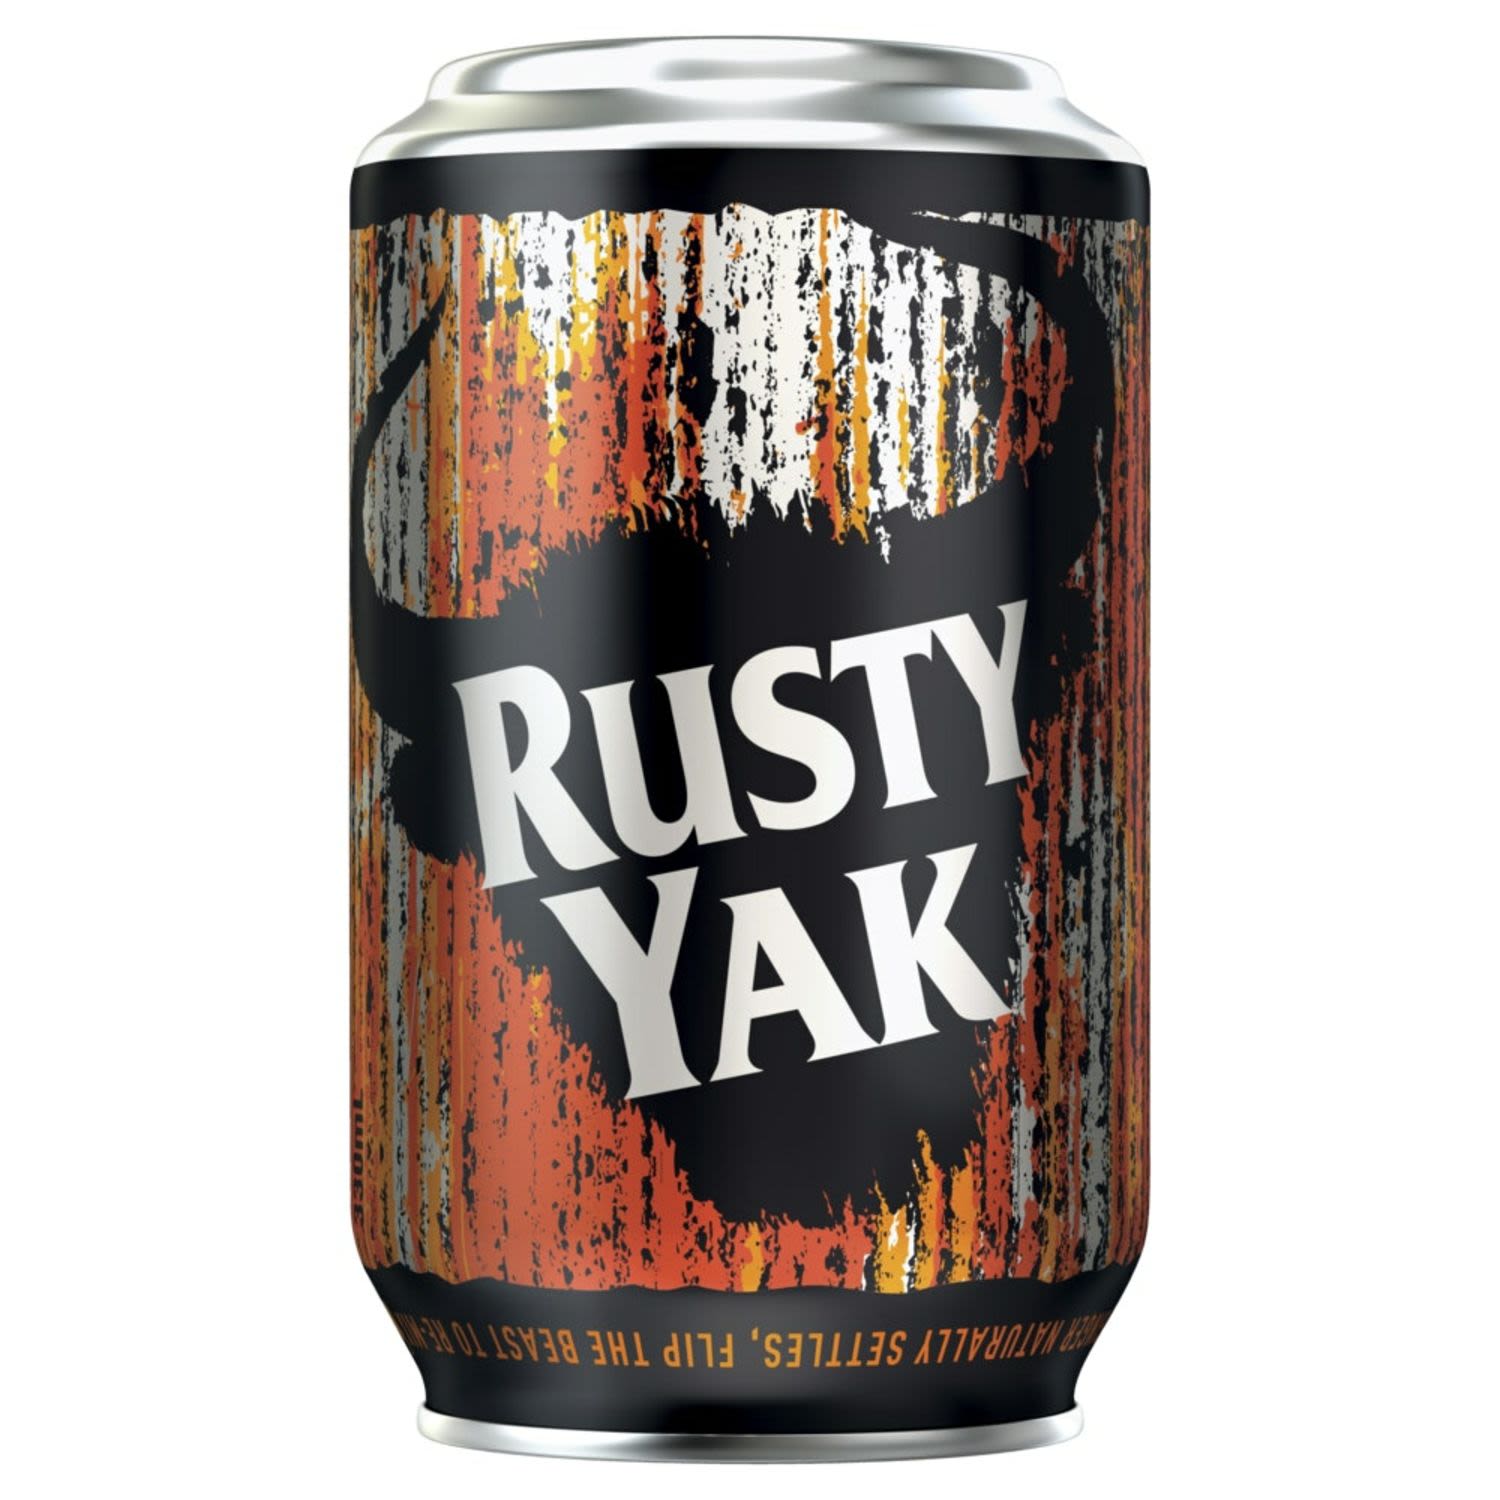 Matilda Bay Rusty Yak Ginger Beer Cans 330mL